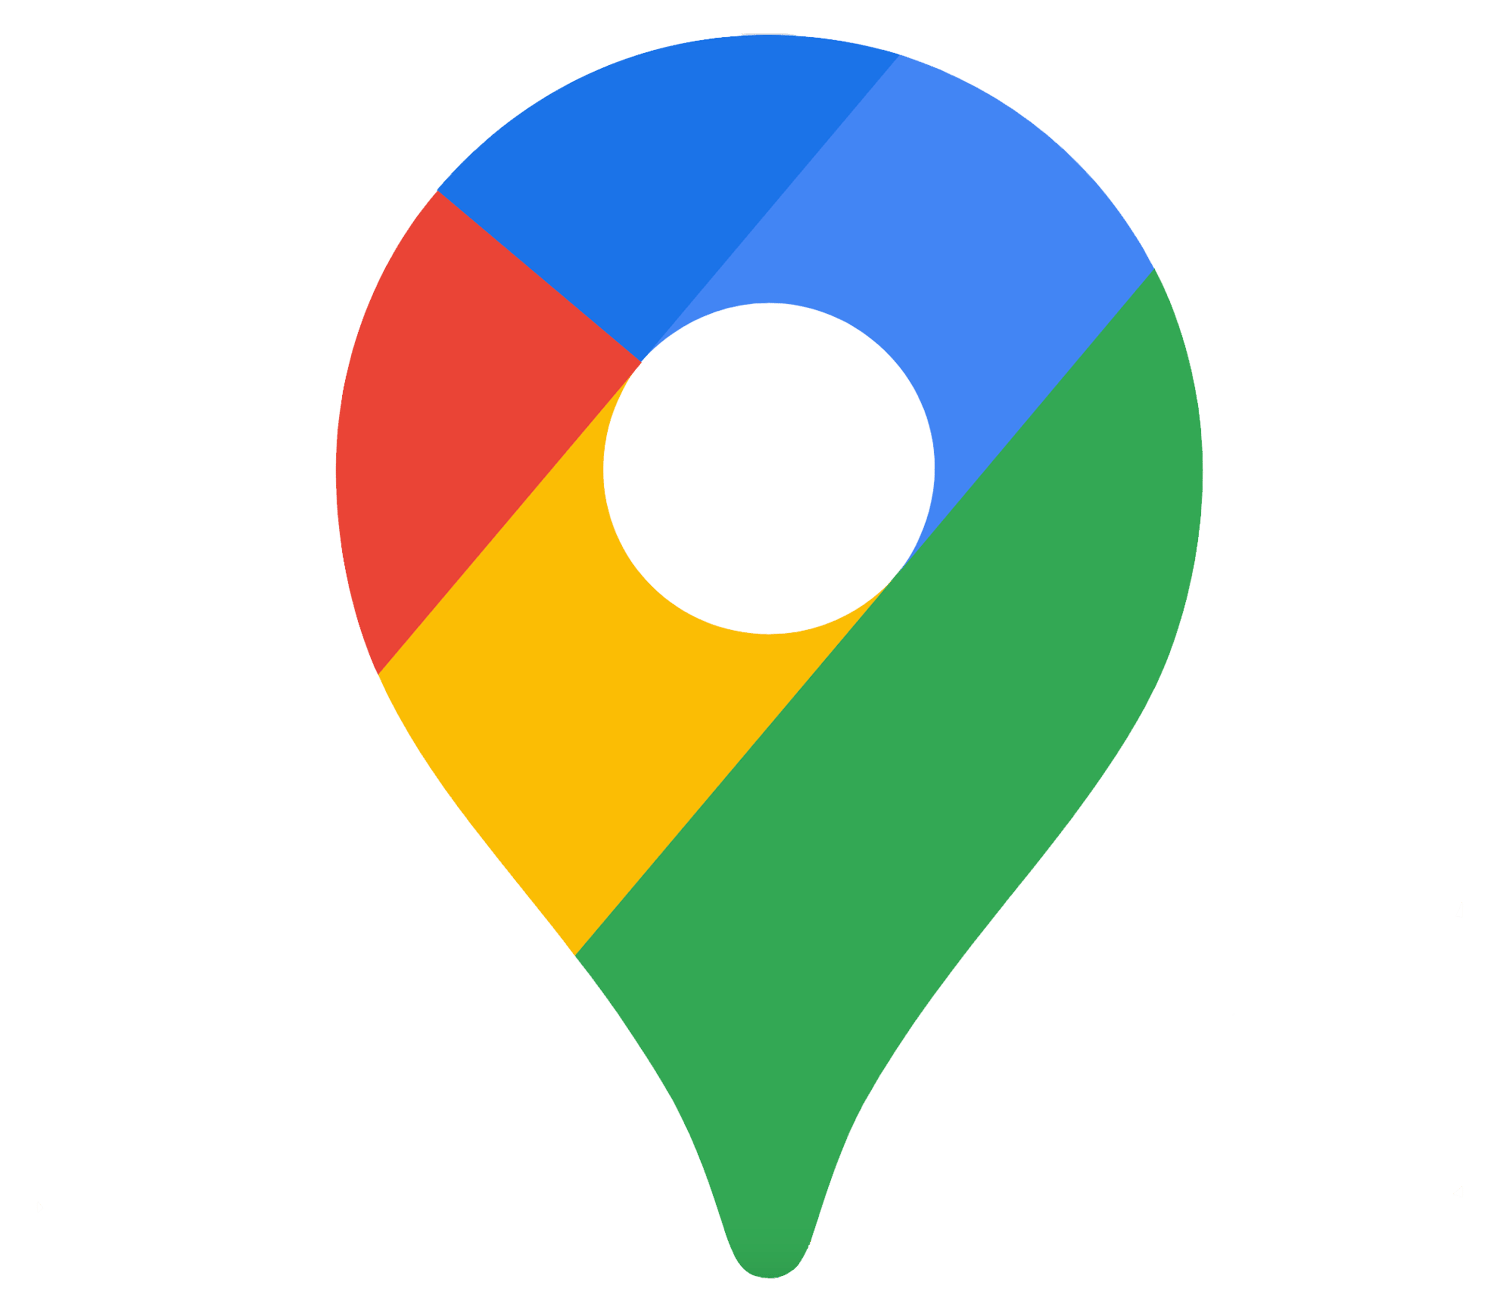 yusuf/google-maps-scraper